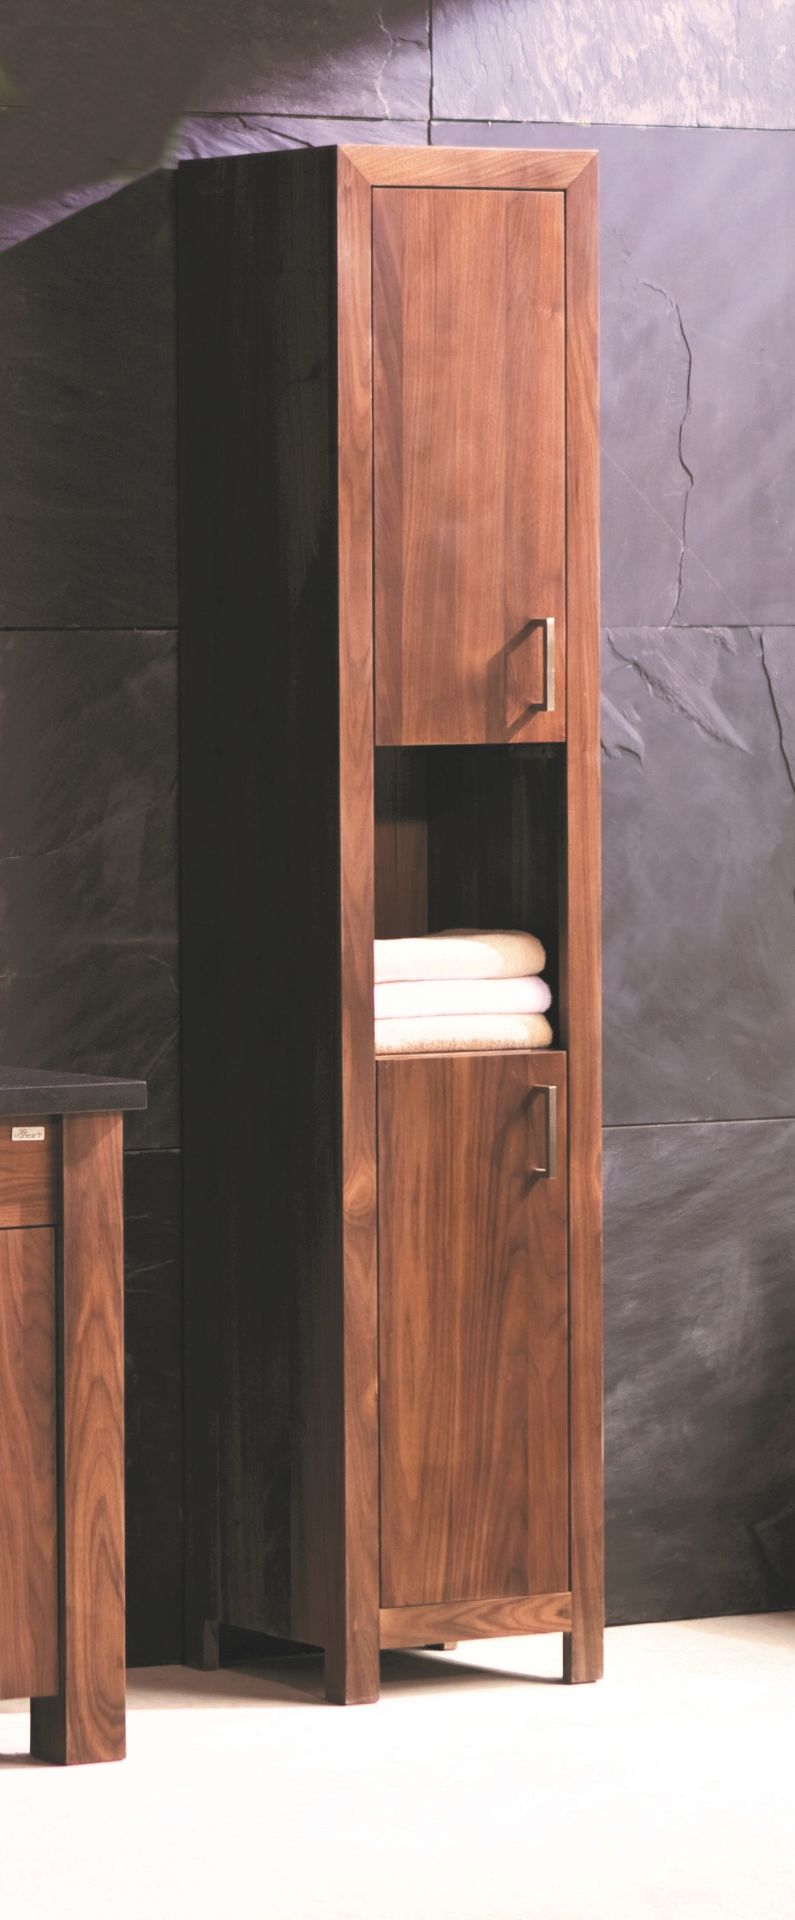 1 x Stonearth Freestanding Tallboy Bathroom Storage Cabinet - American Solid Walnut - RRP £996! - Image 3 of 14